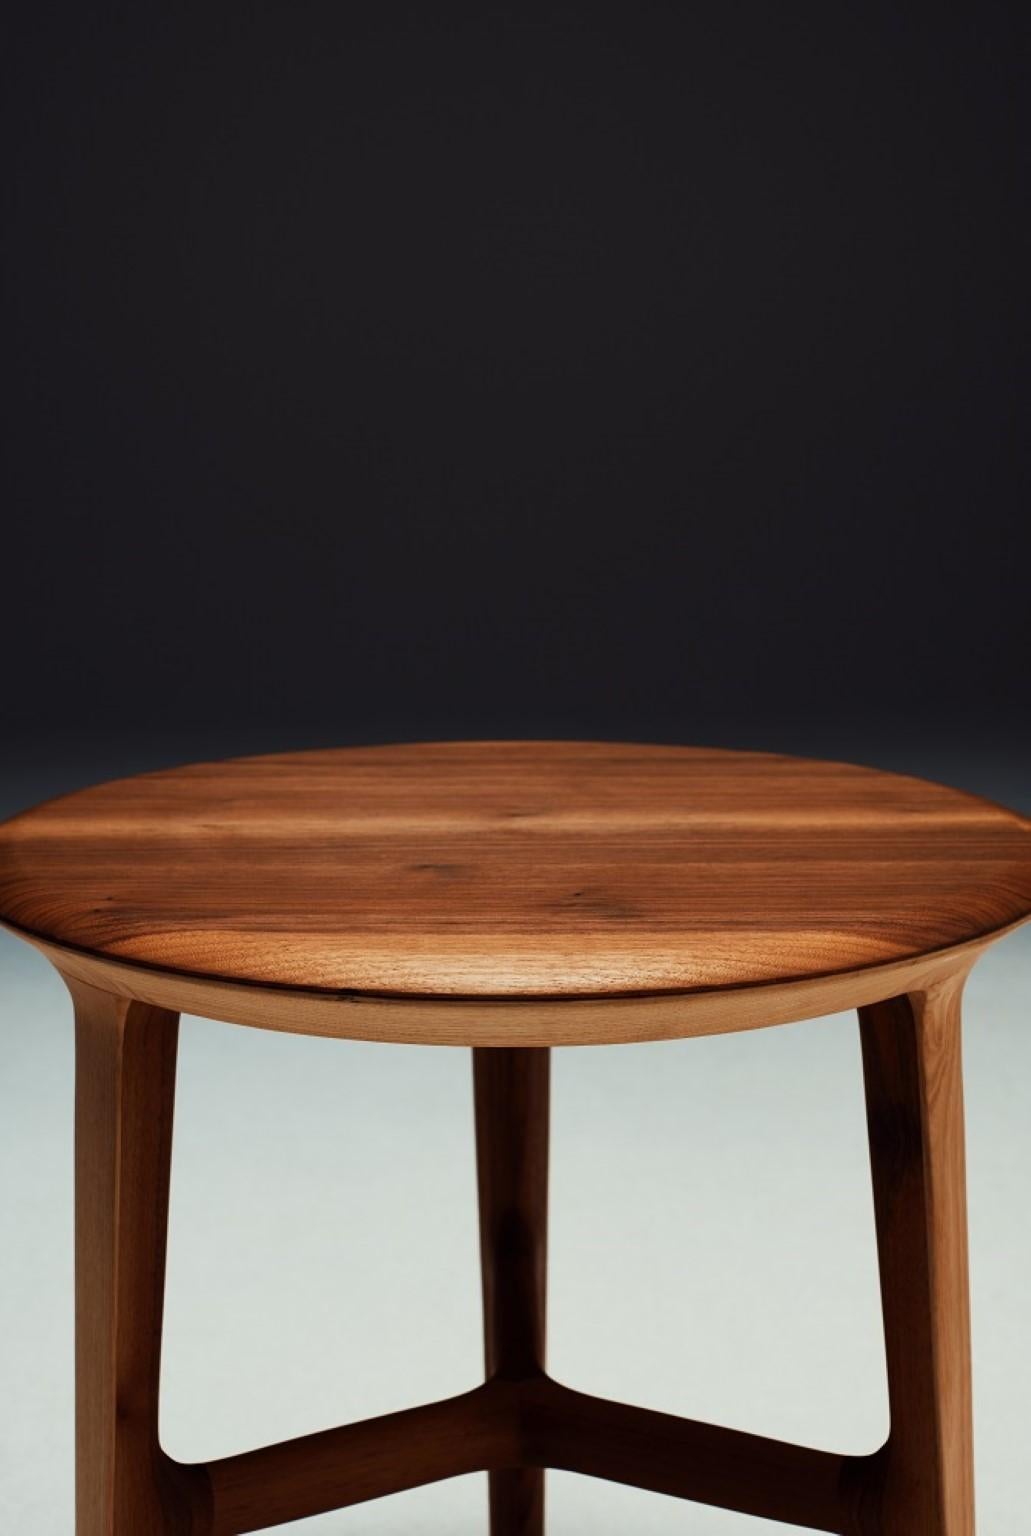 Organic Modern Yakisugi Table Basse by Noé Duchaufour Lawrance